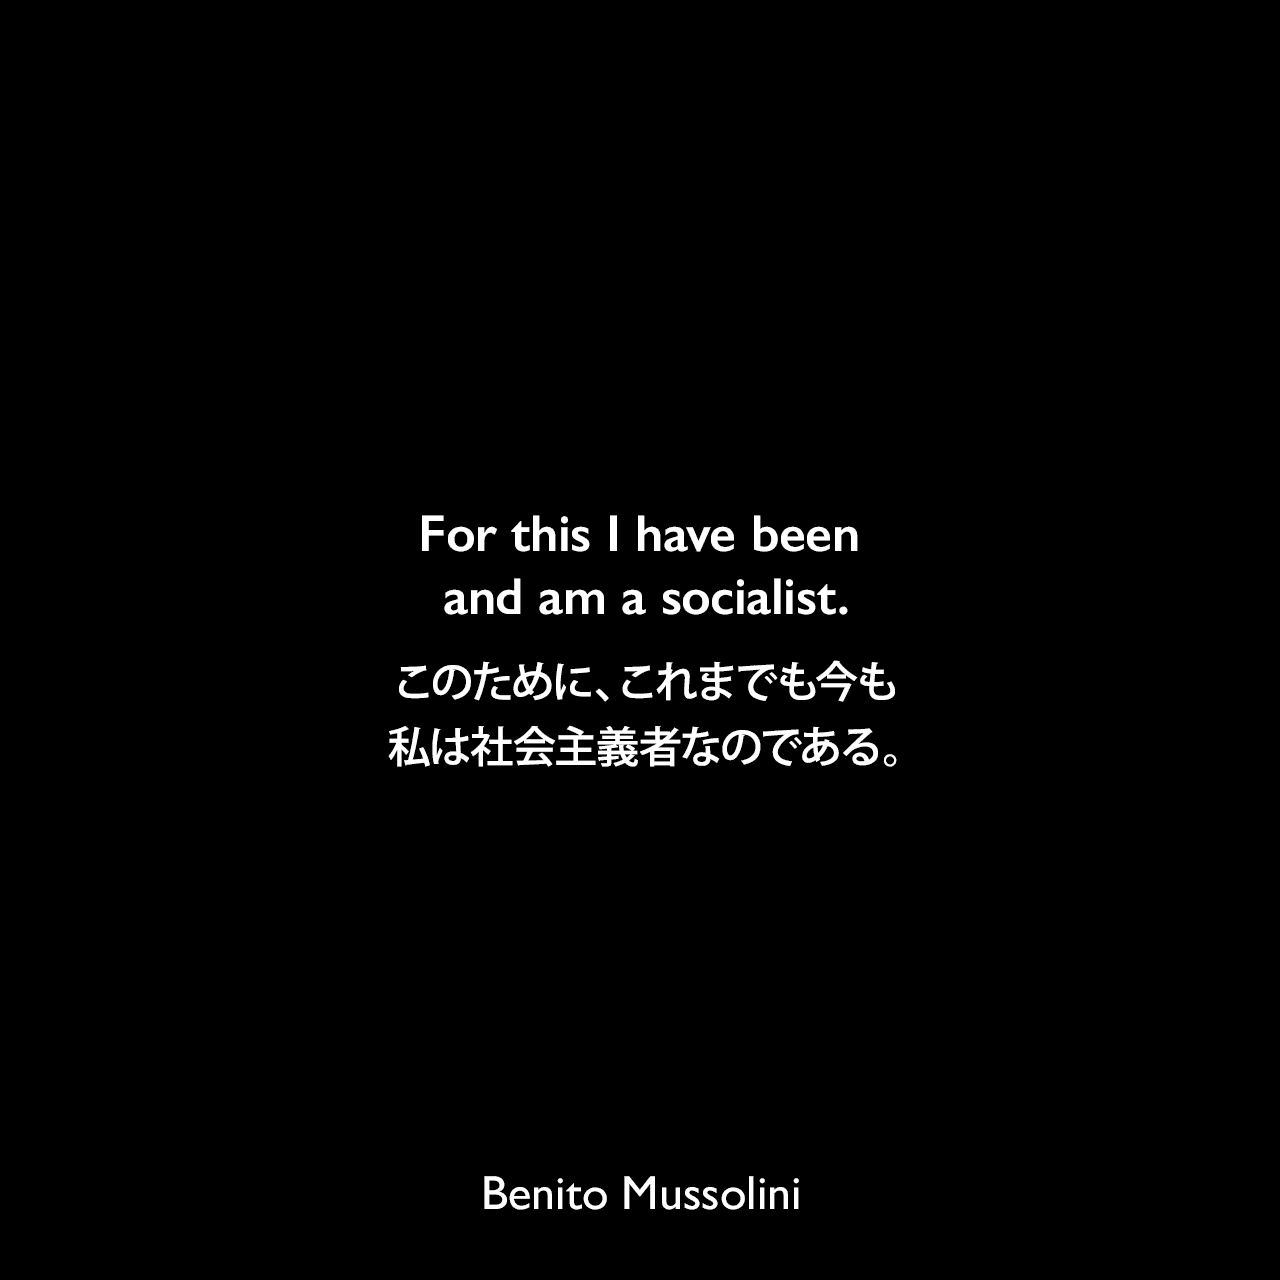 For this I have been and am a socialist.このために、これまでも今も私は社会主義者なのである。- 1945年3月20日 ムッソリーニの最後のインタビューの一つ「オペラ・オムニア」よりBenito Mussolini